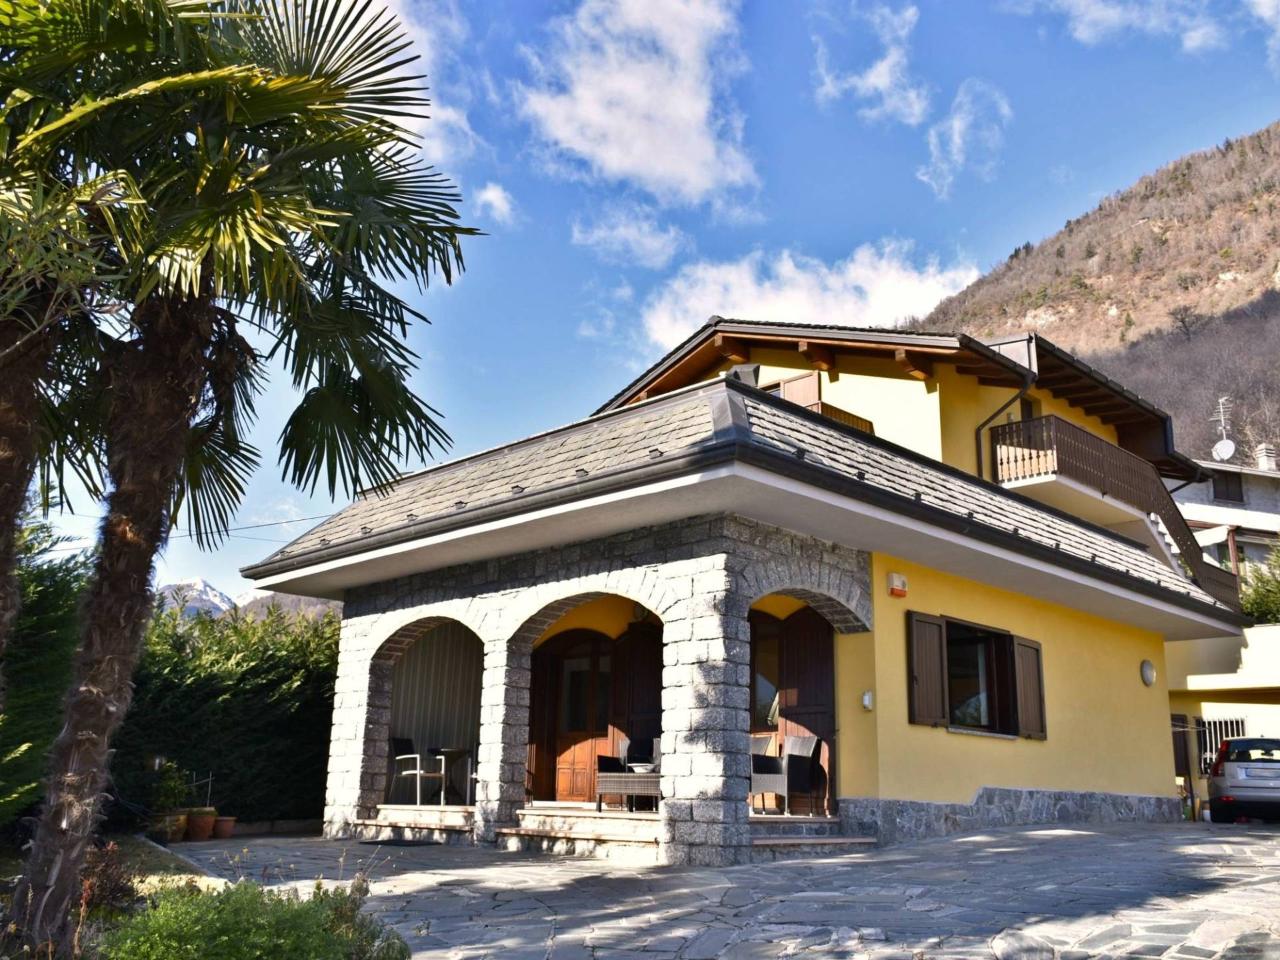 Villa in vendita a Ponte In Valtellina